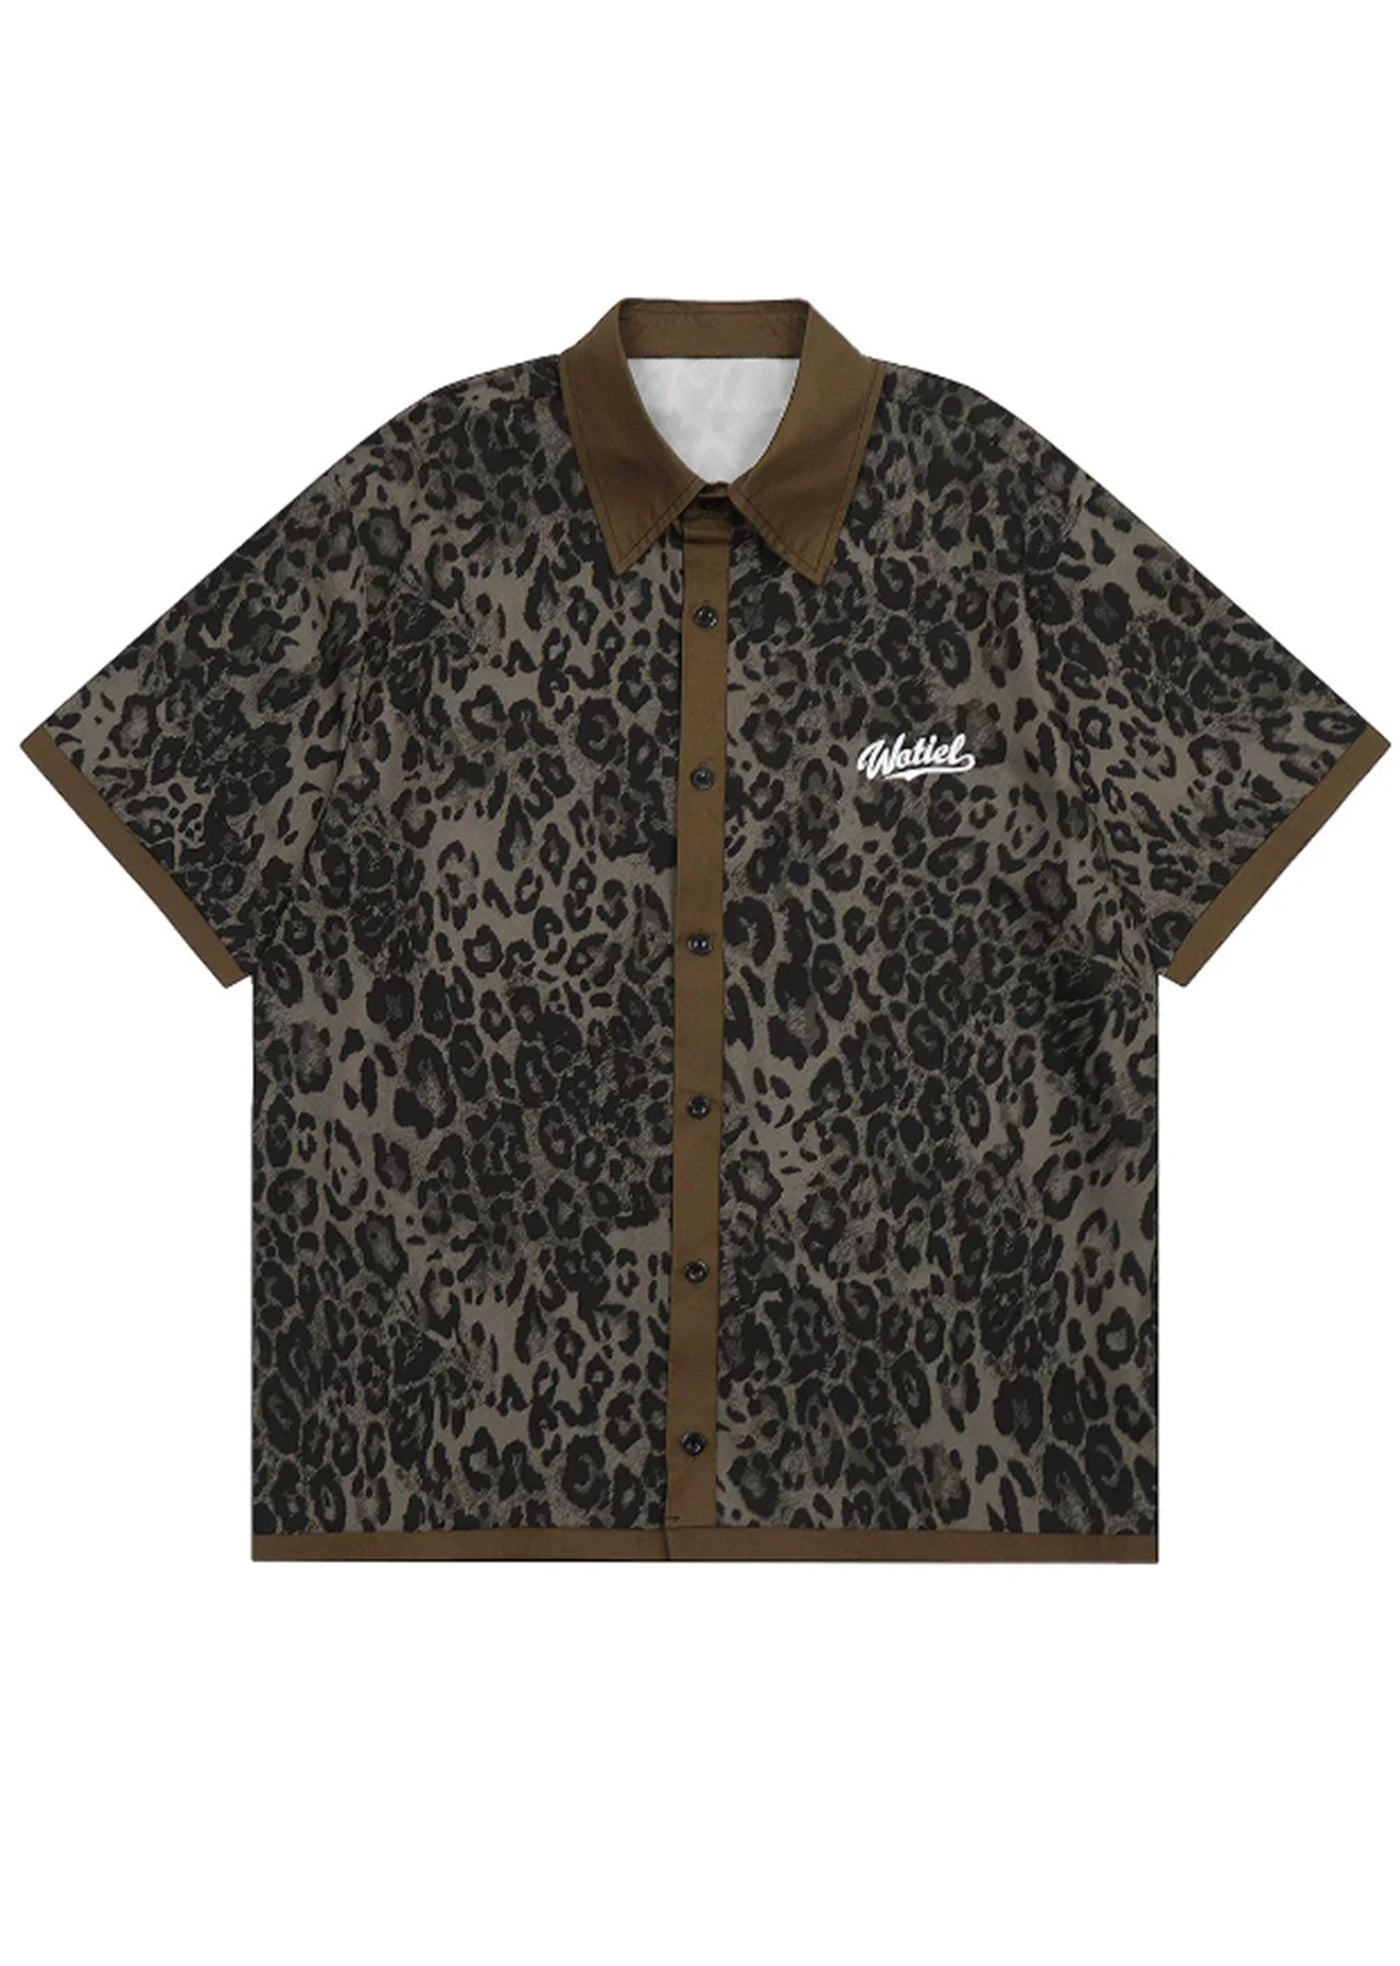 【TR BRUSHSHIFT】Allover Leopard Design Graphic Loose Silhouette Short Sleeve Shirt  TB0035